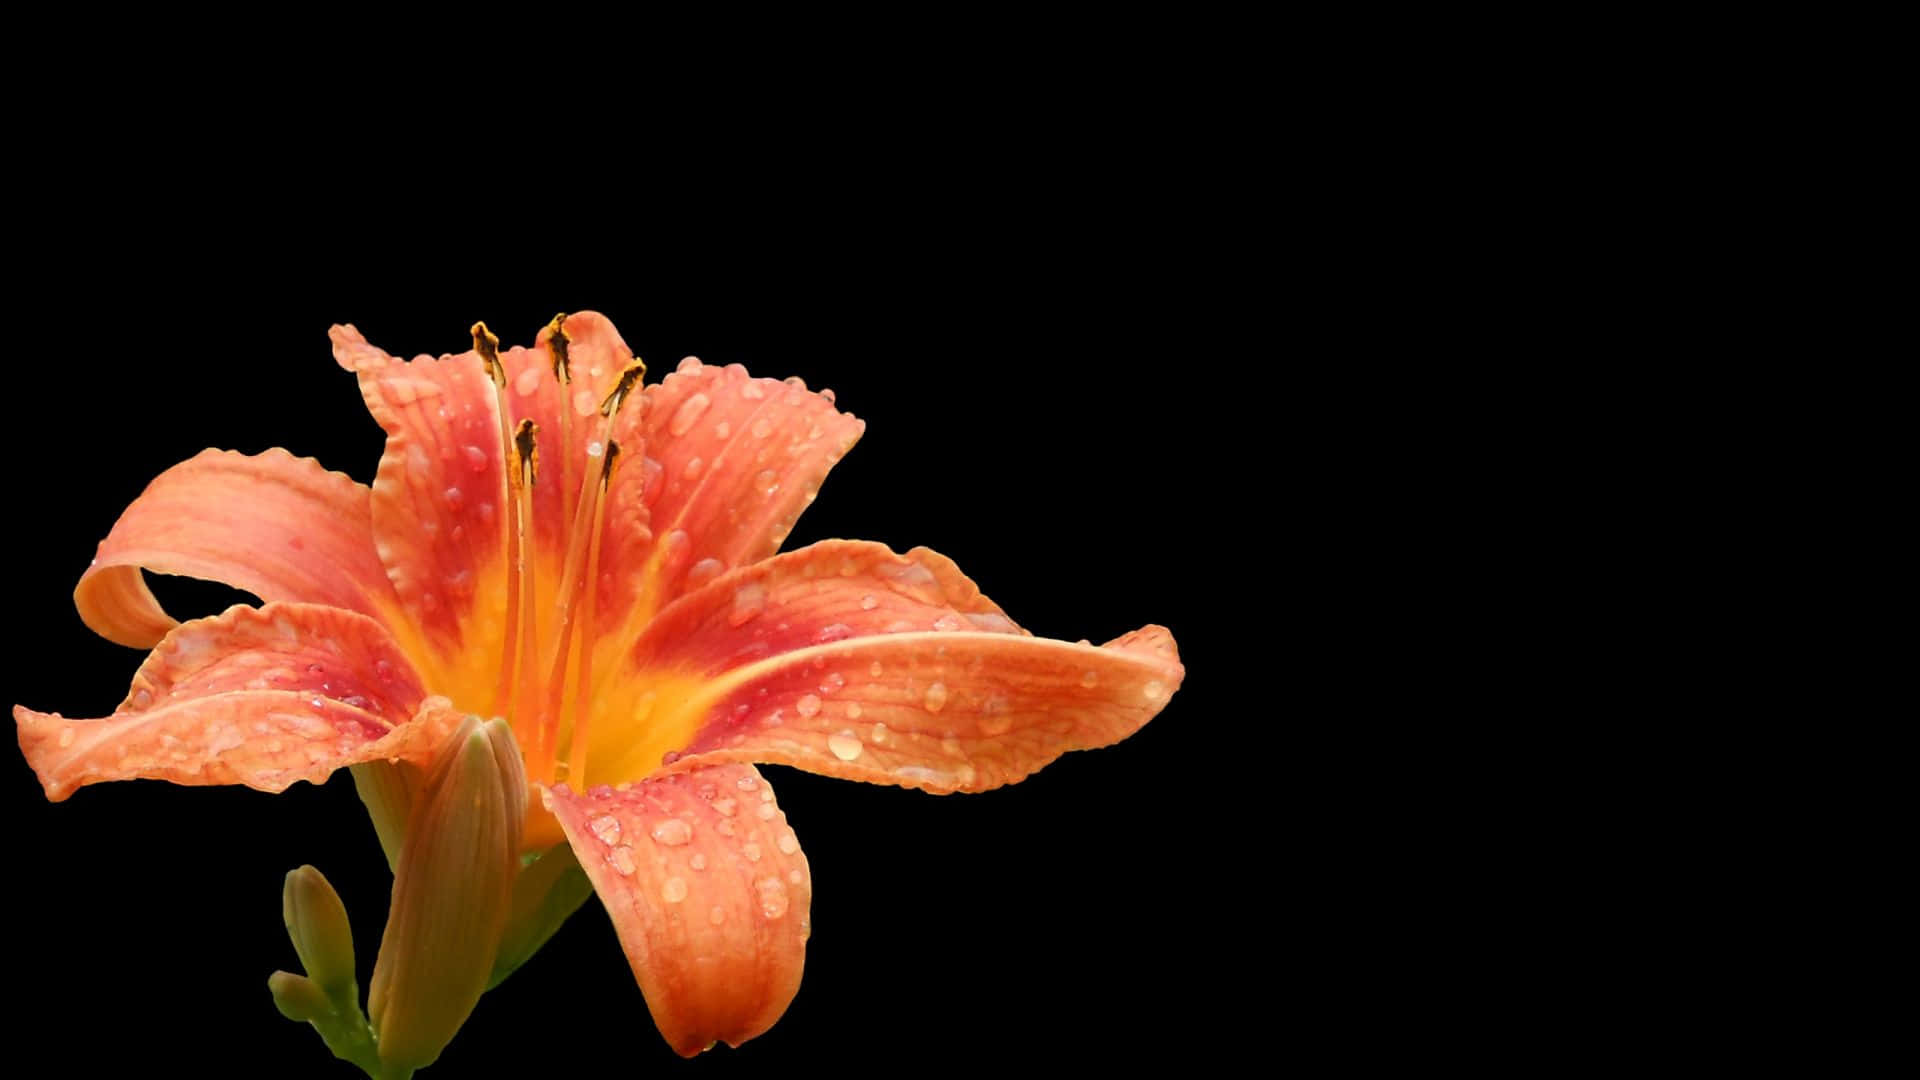 Wet Orange Lily Flower Wallpaper